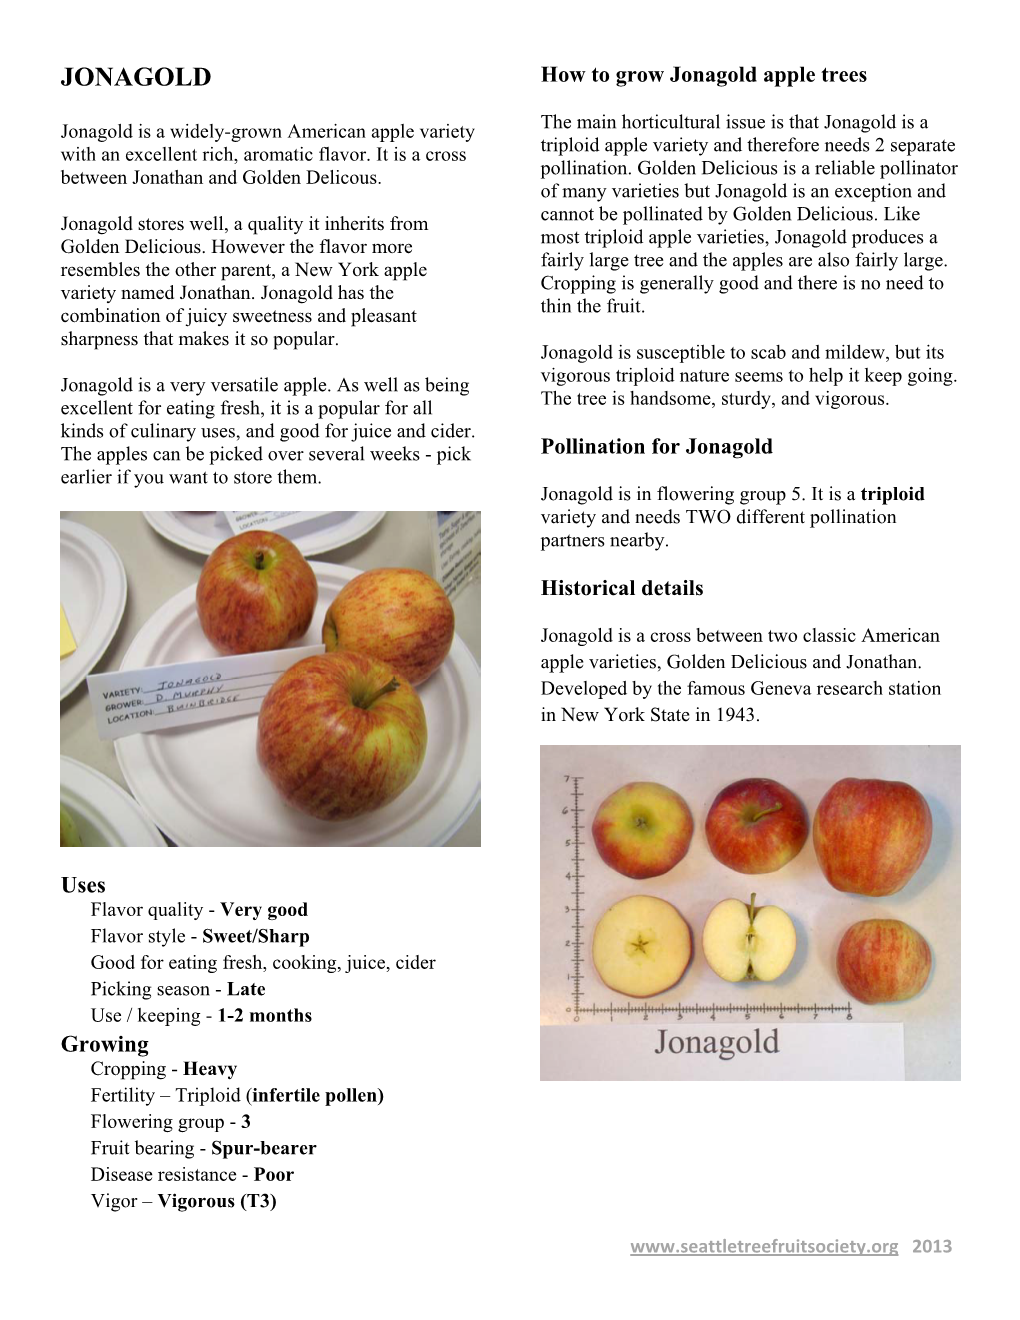 JONAGOLD How to Grow Jonagold Apple Trees